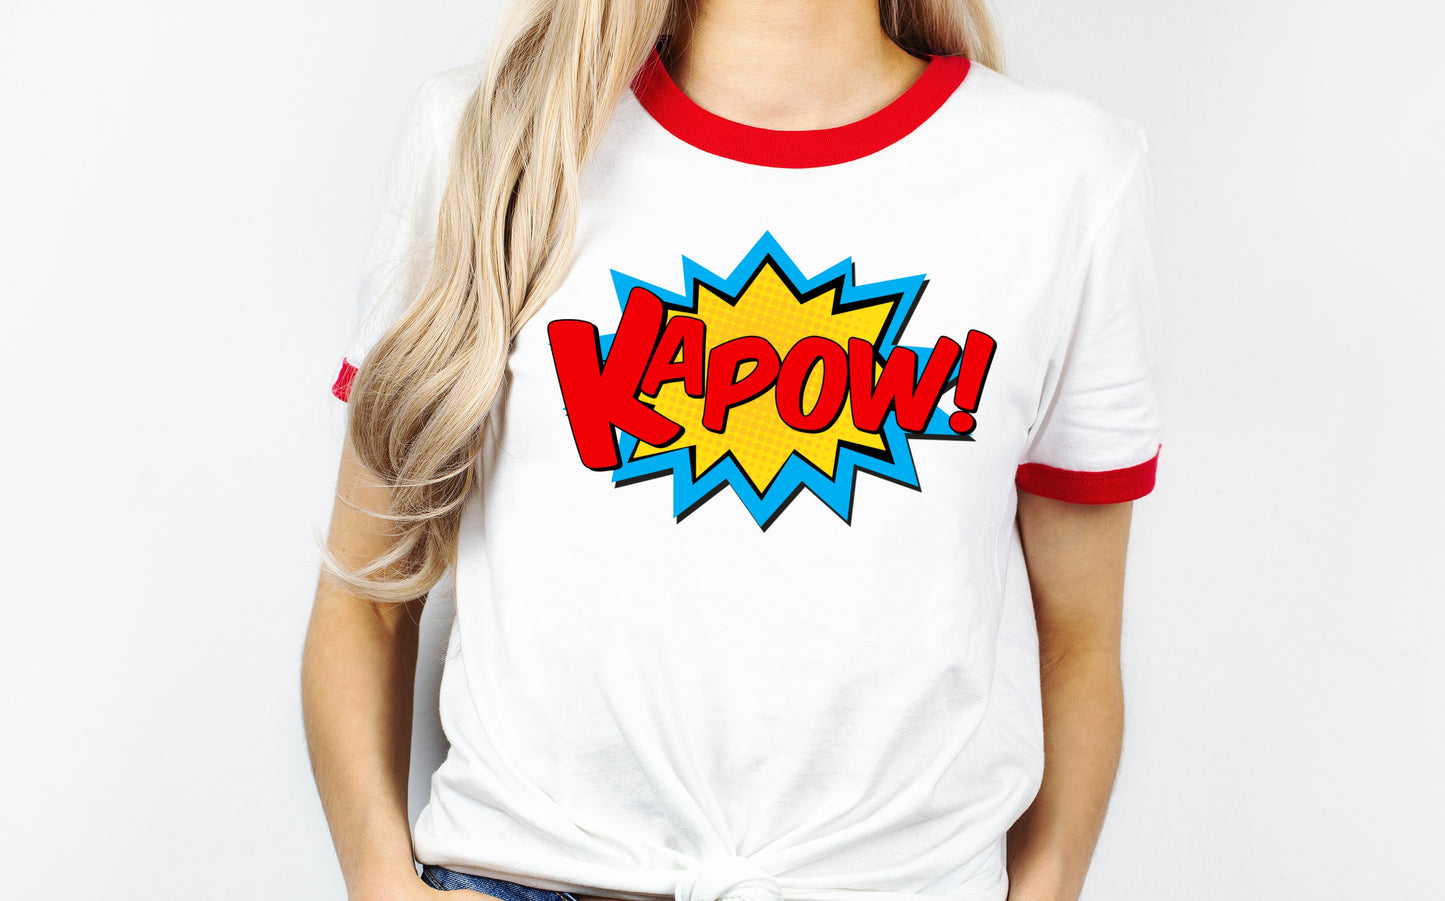 KAPOW Red and White Ringer T-Shirt